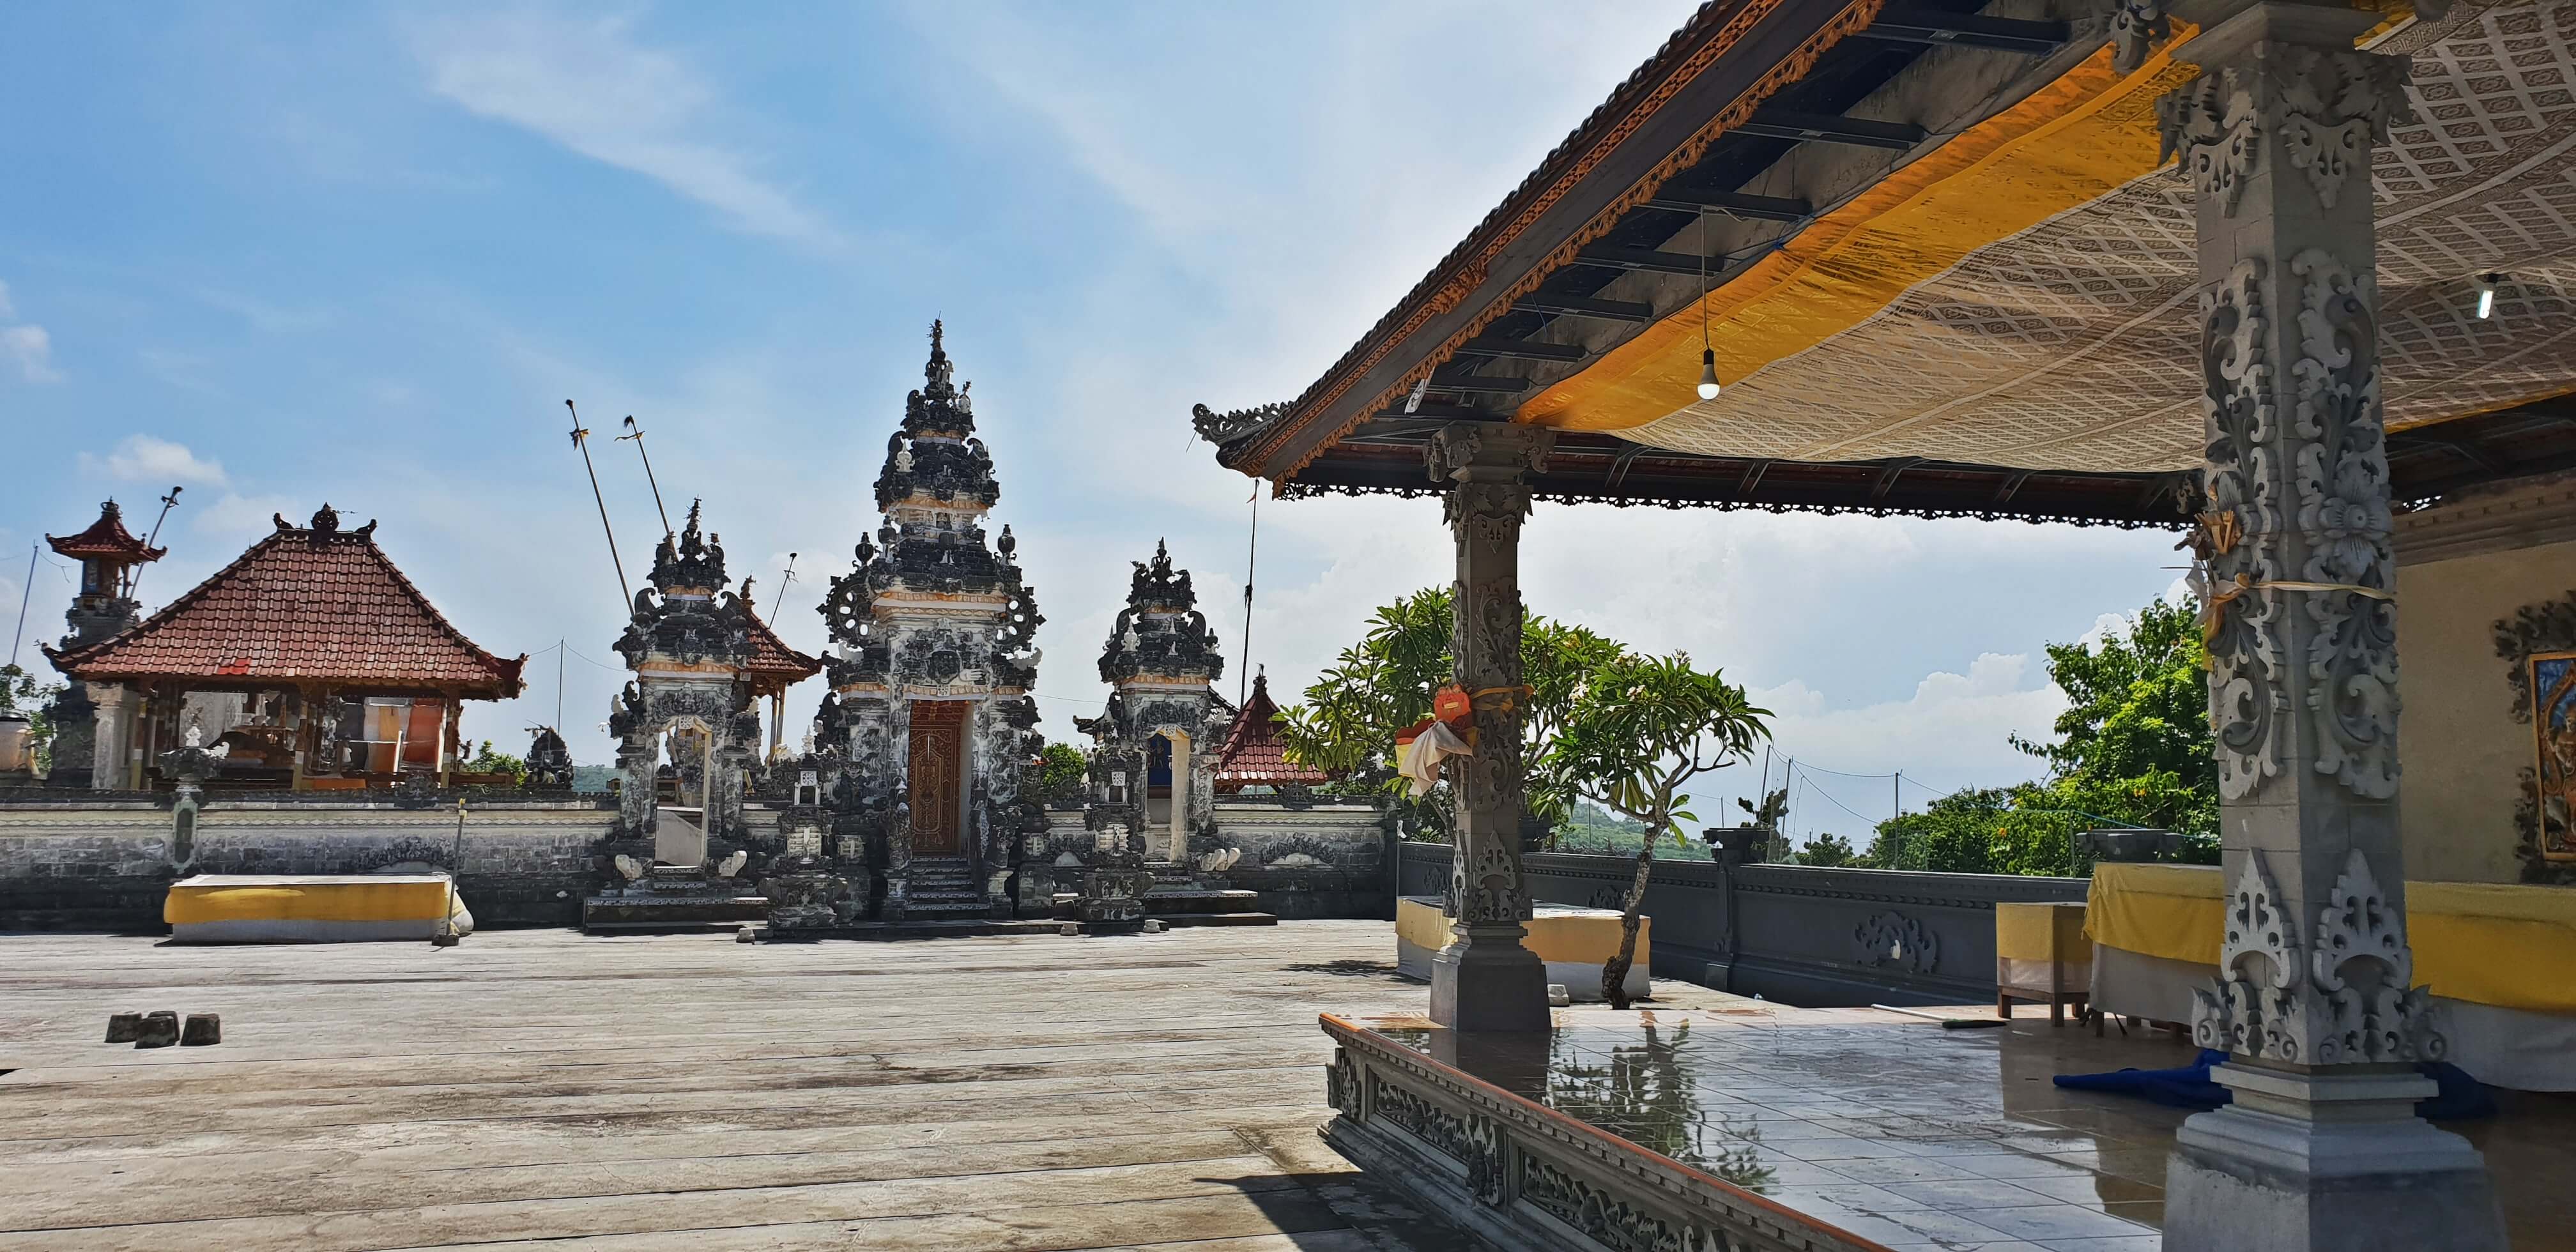 The Peluang Car temple in Nusa Penida